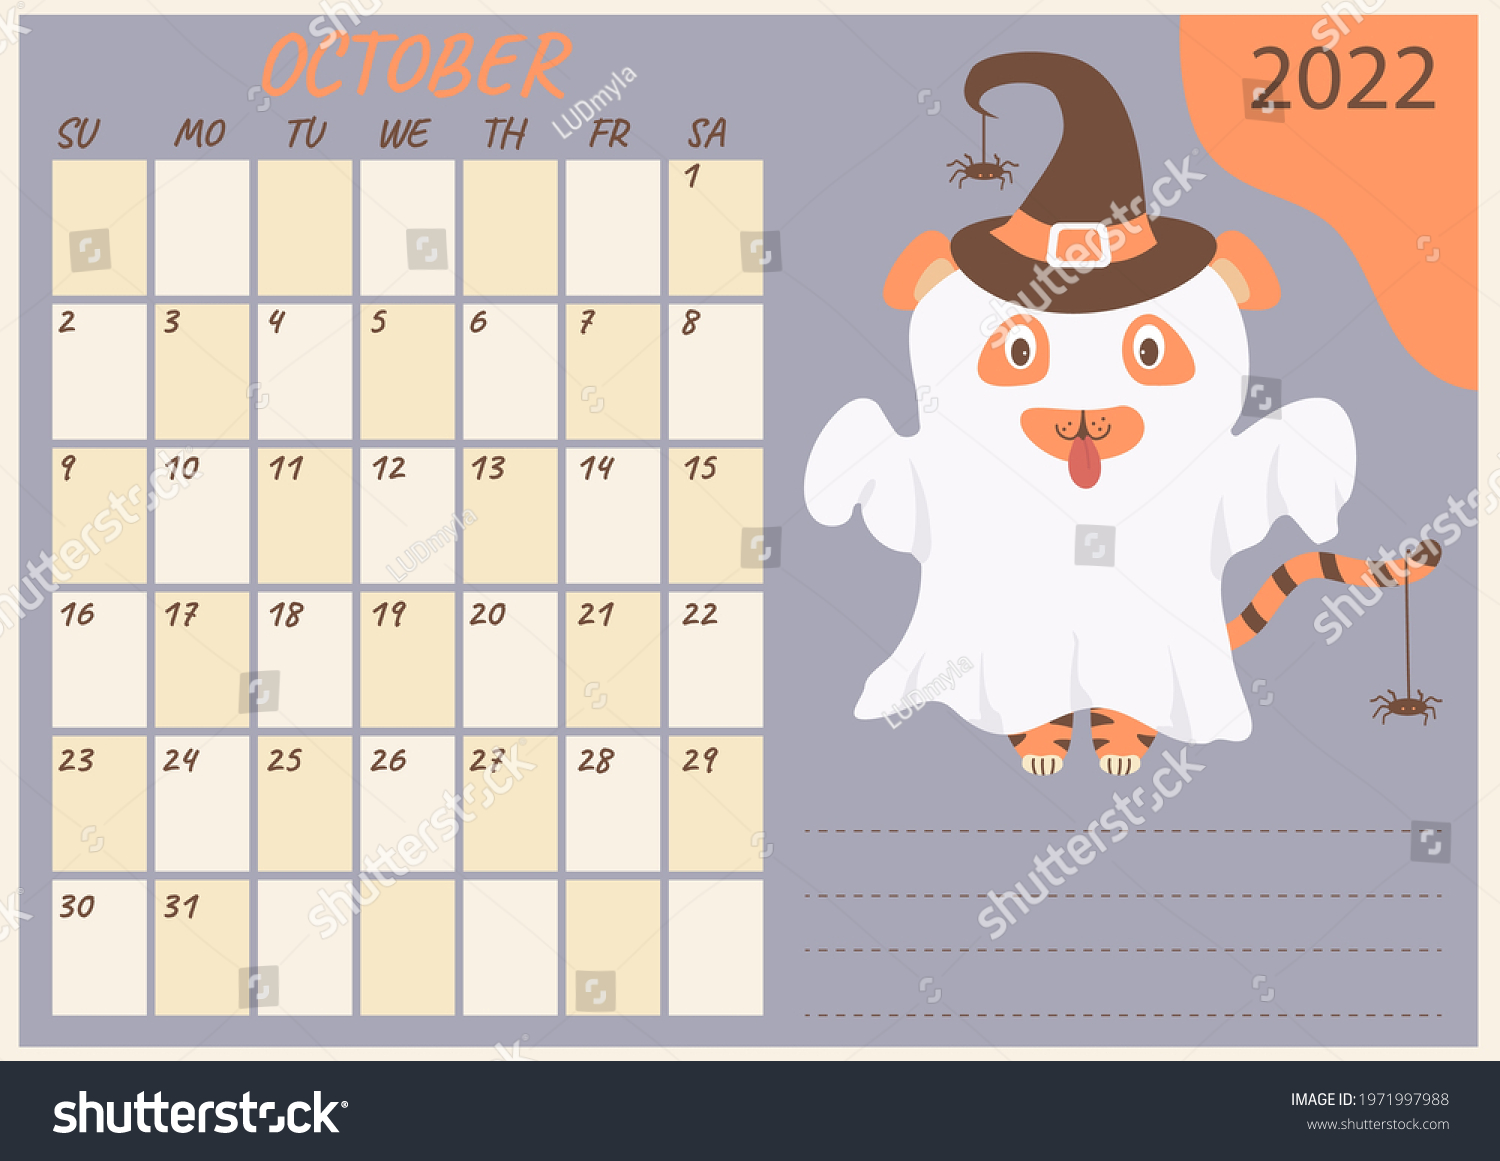 Halloween 2022 Calendar Planner Calendar October 2022 Cute Ghost Stock Vector (Royalty Free)  1971997988